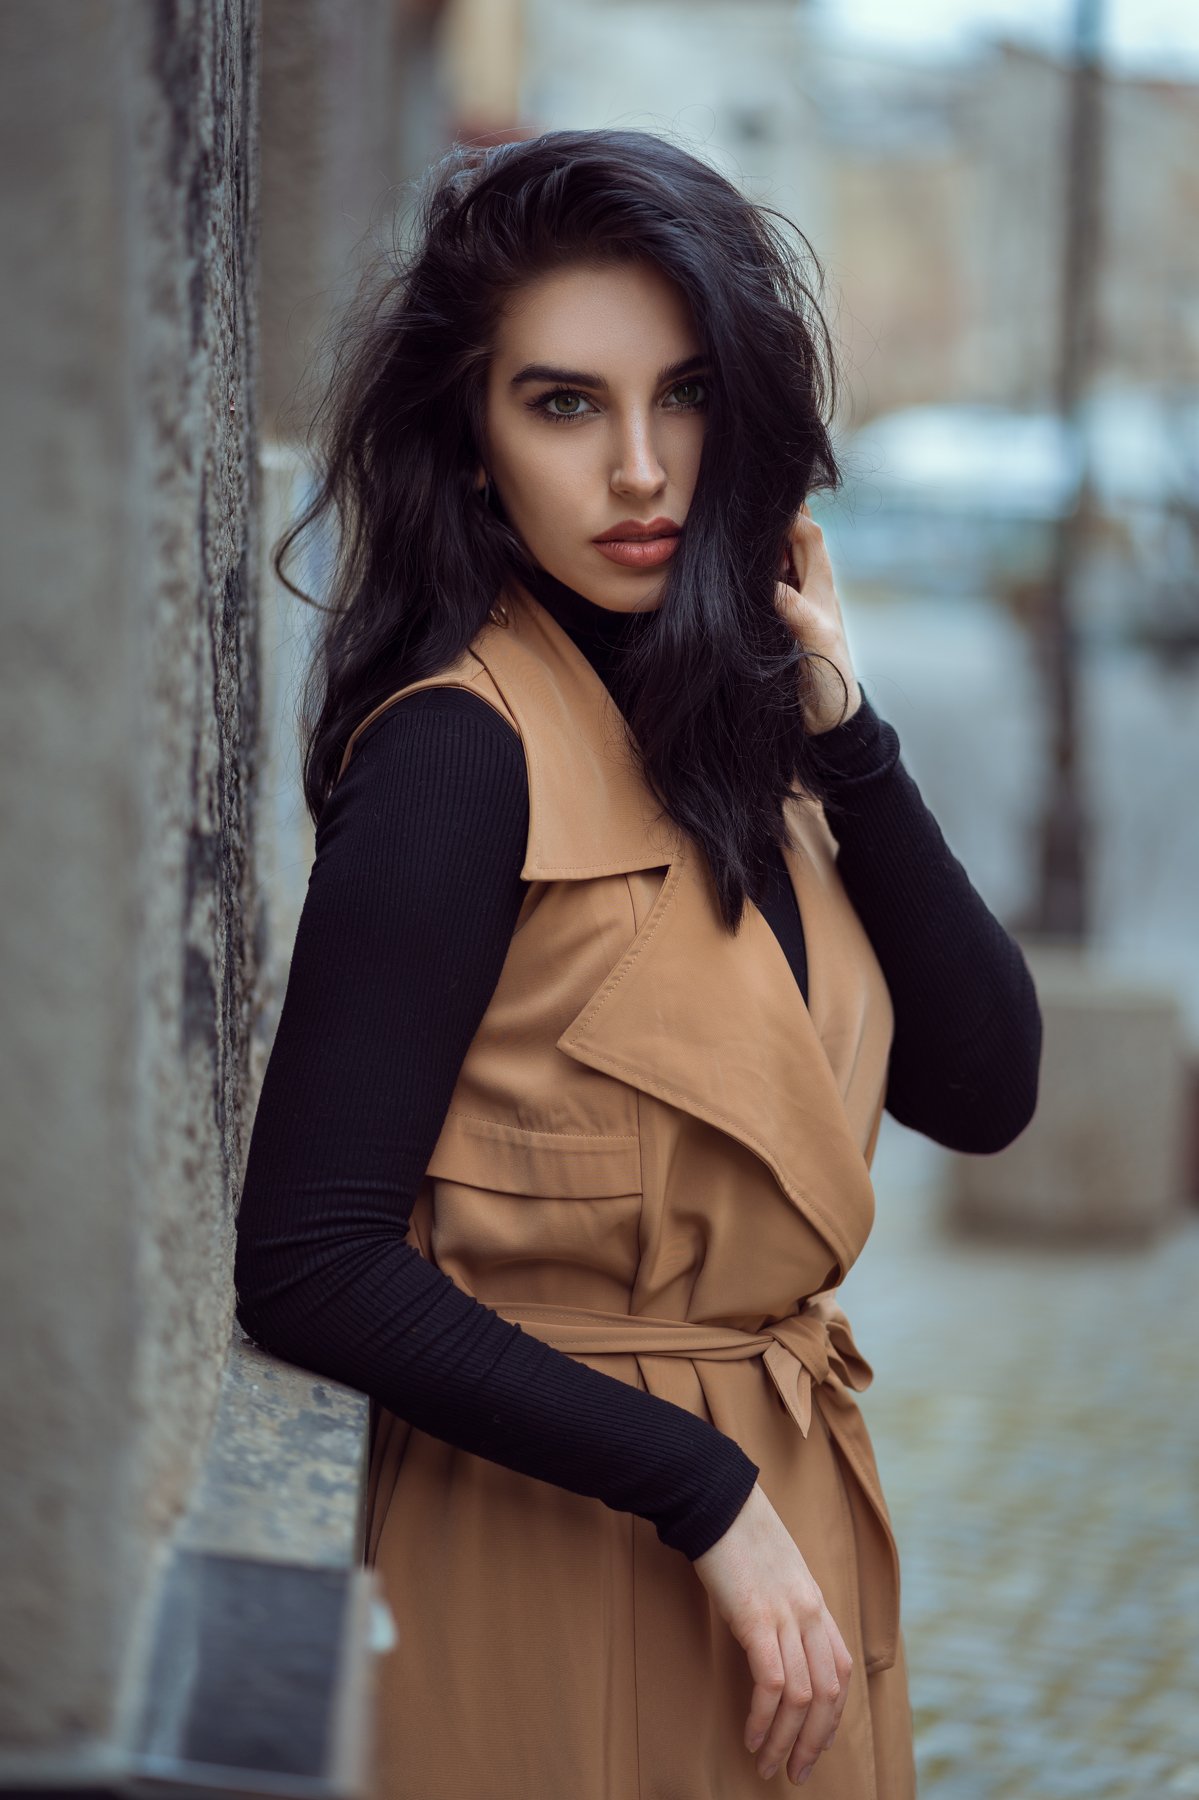 model, girl, beauty, sexy, style, outdoor, albanian, woman, brunette, color, bokeh, 85mm, sony, fashion, Andrei Marginean